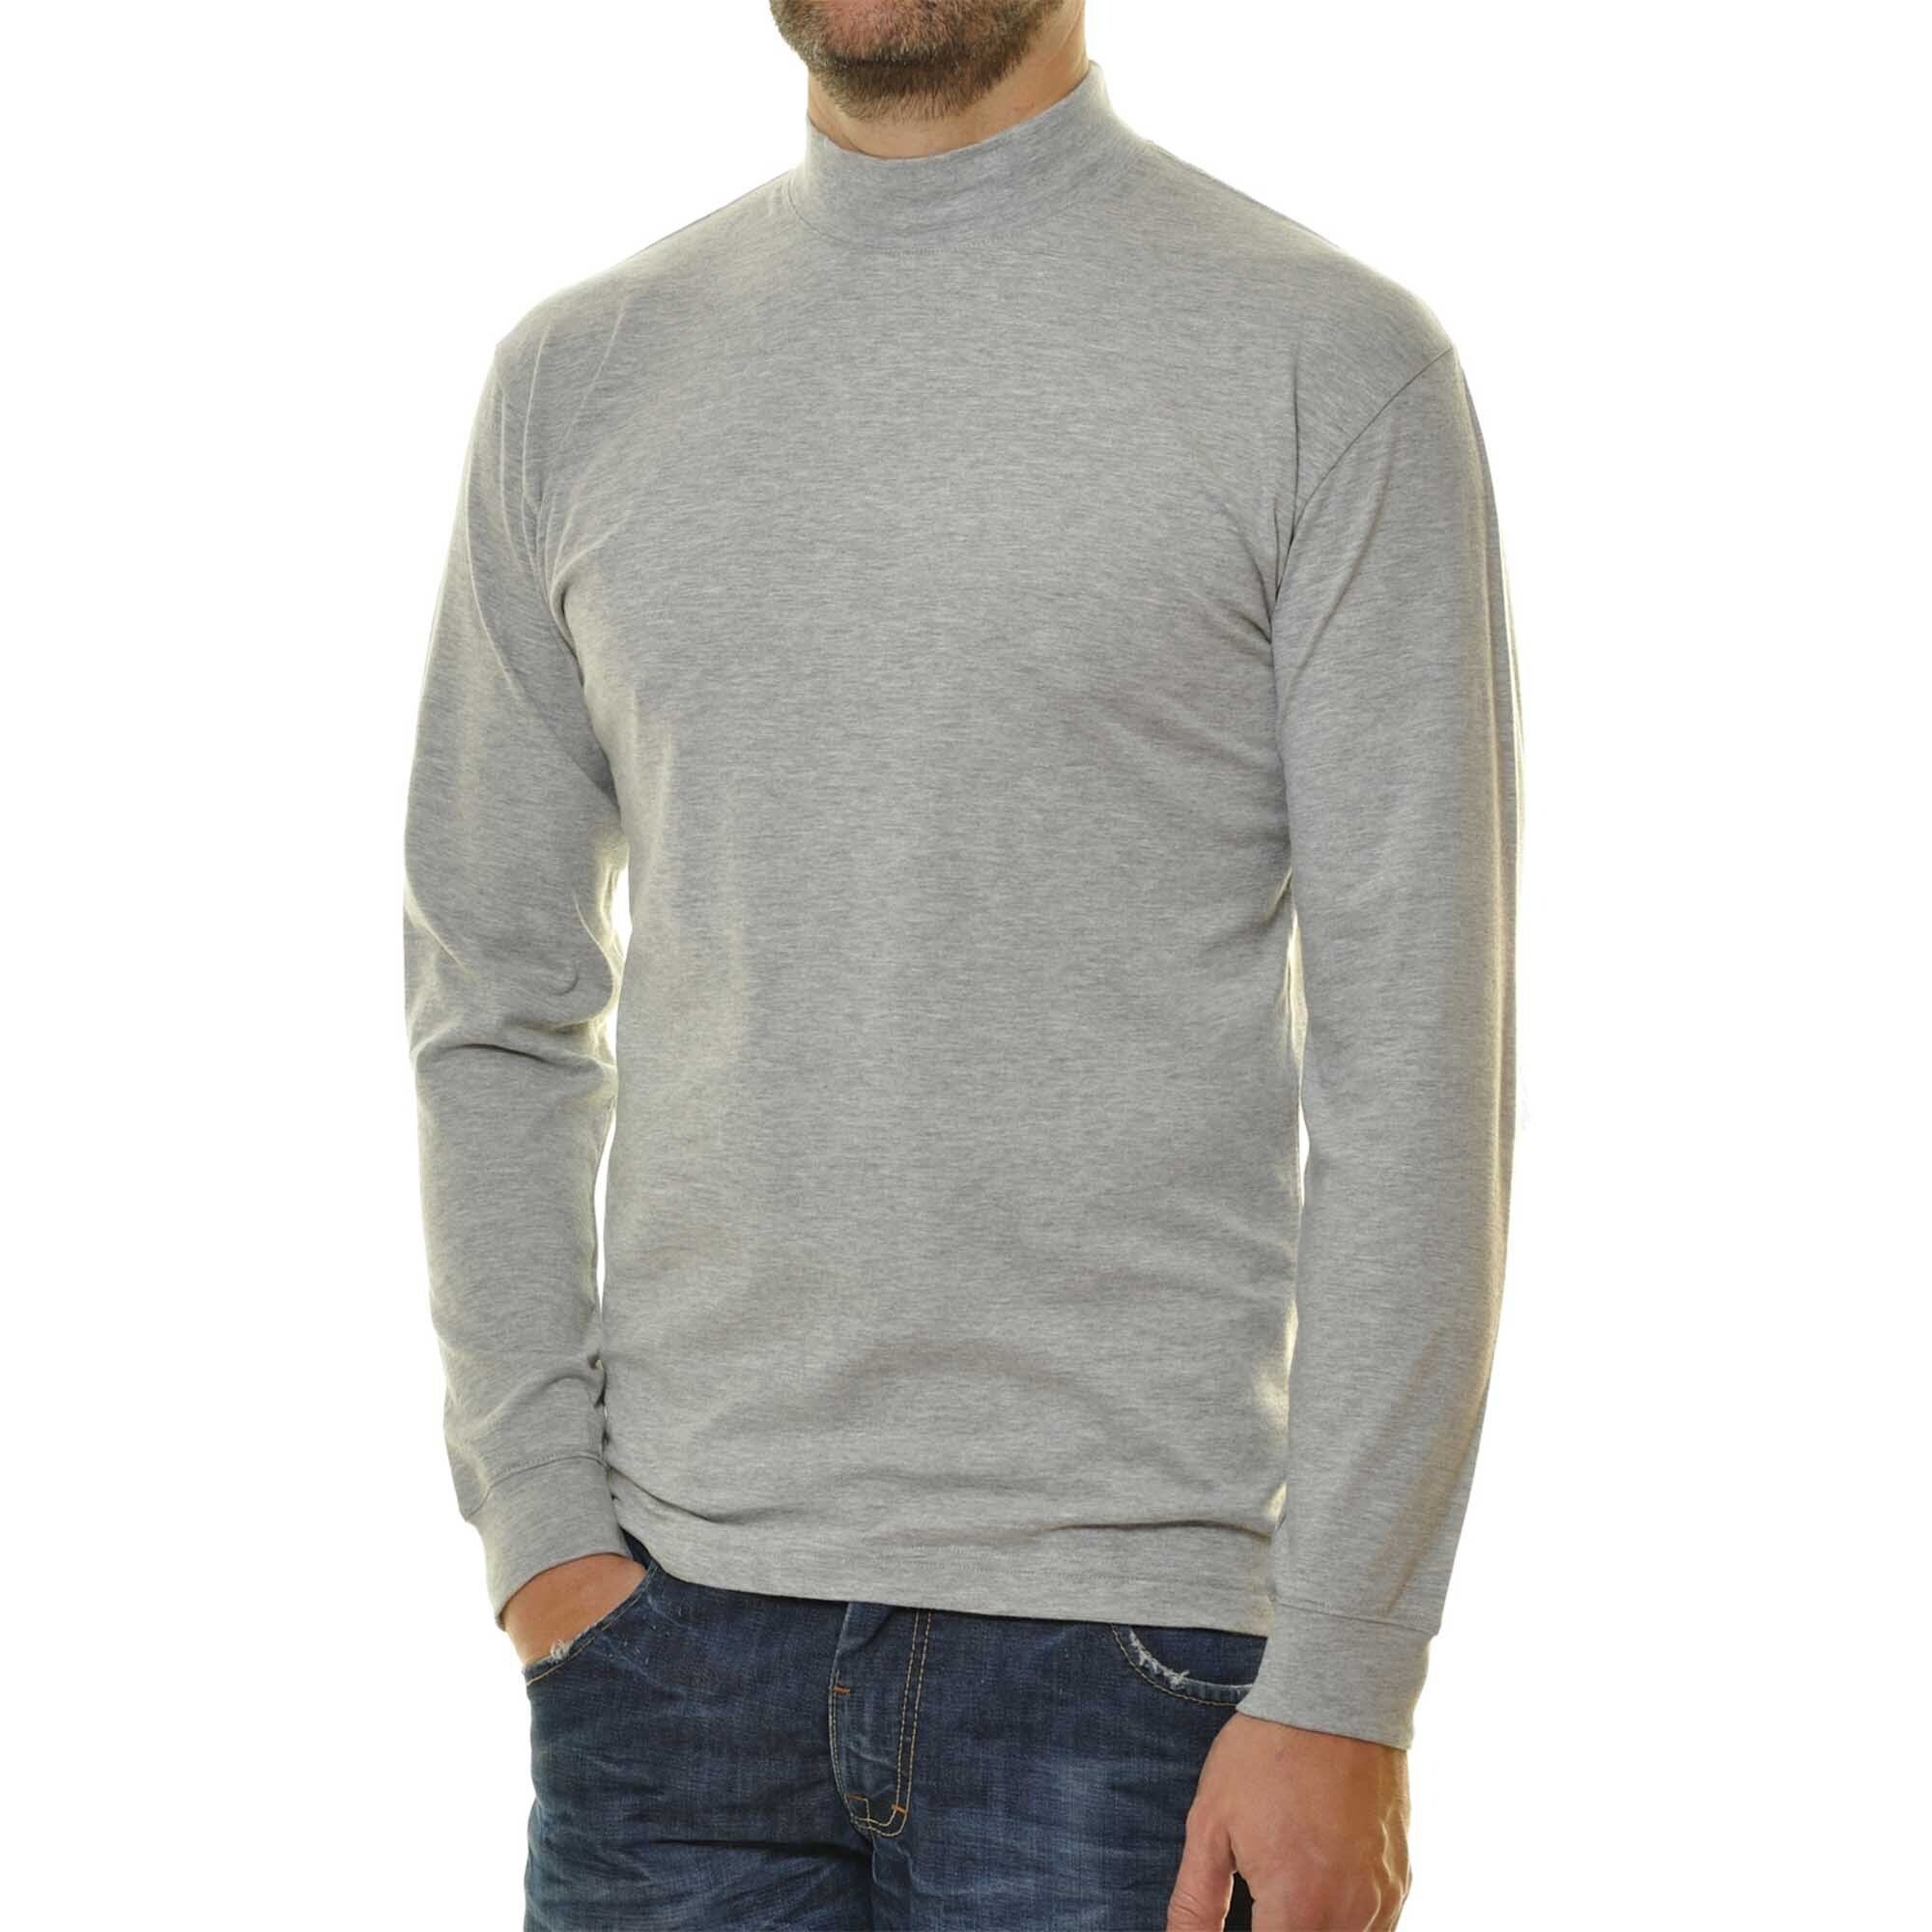 Basic Grau Melange - Langarm Sweatshirt Herren RAGMAN Stehkragen-Pullover